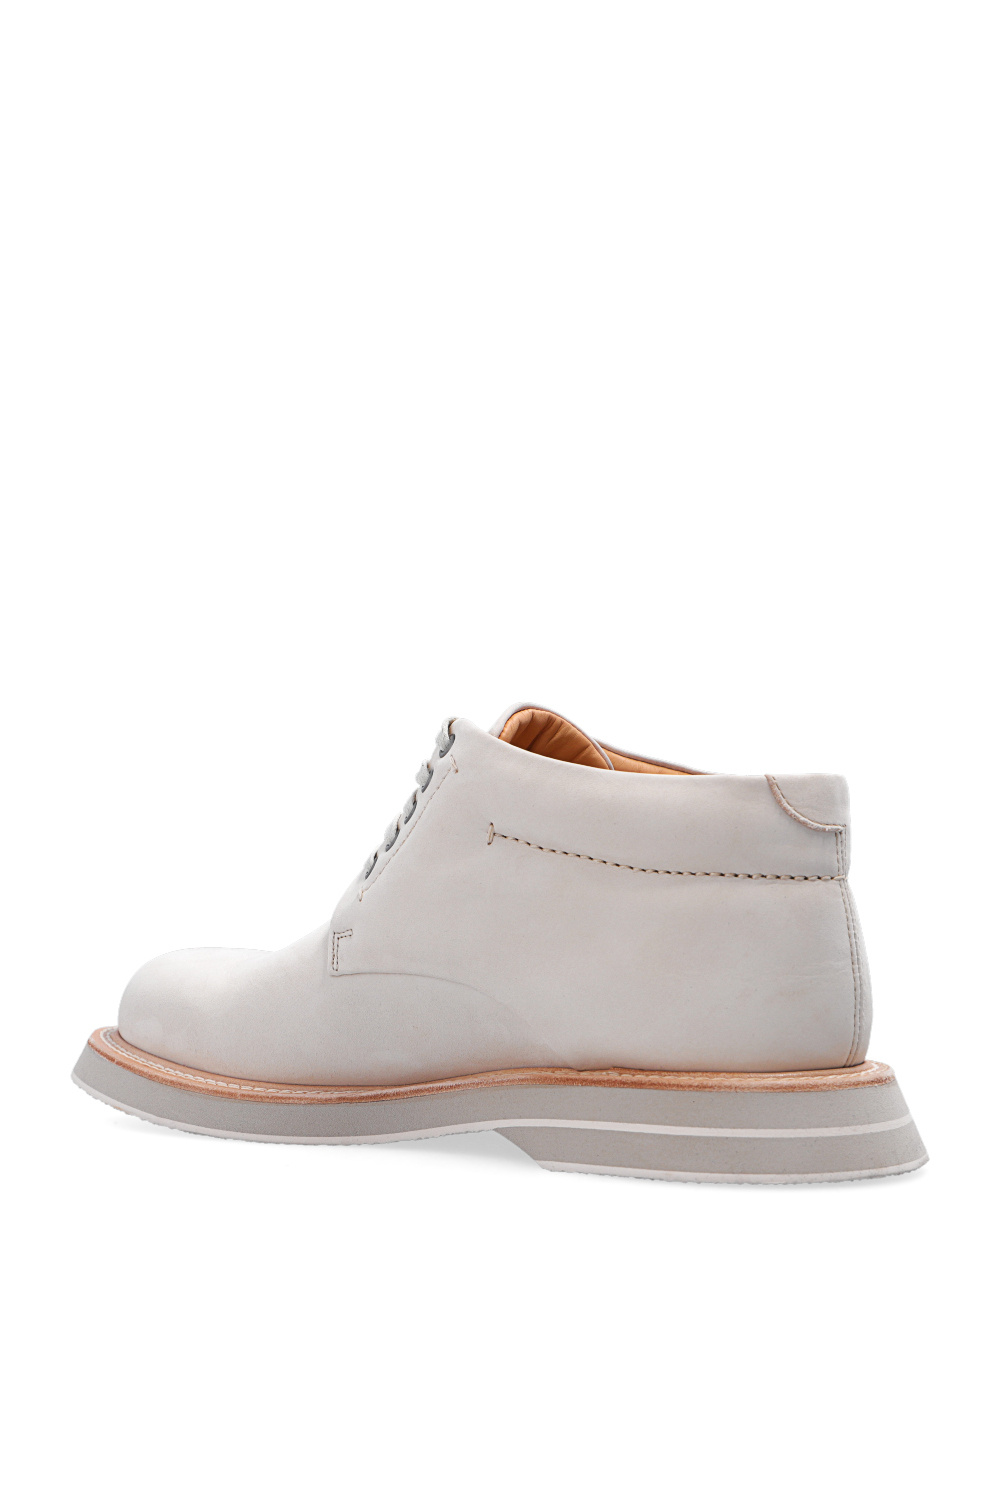 Jacquemus ‘Bricolo’ leather boots